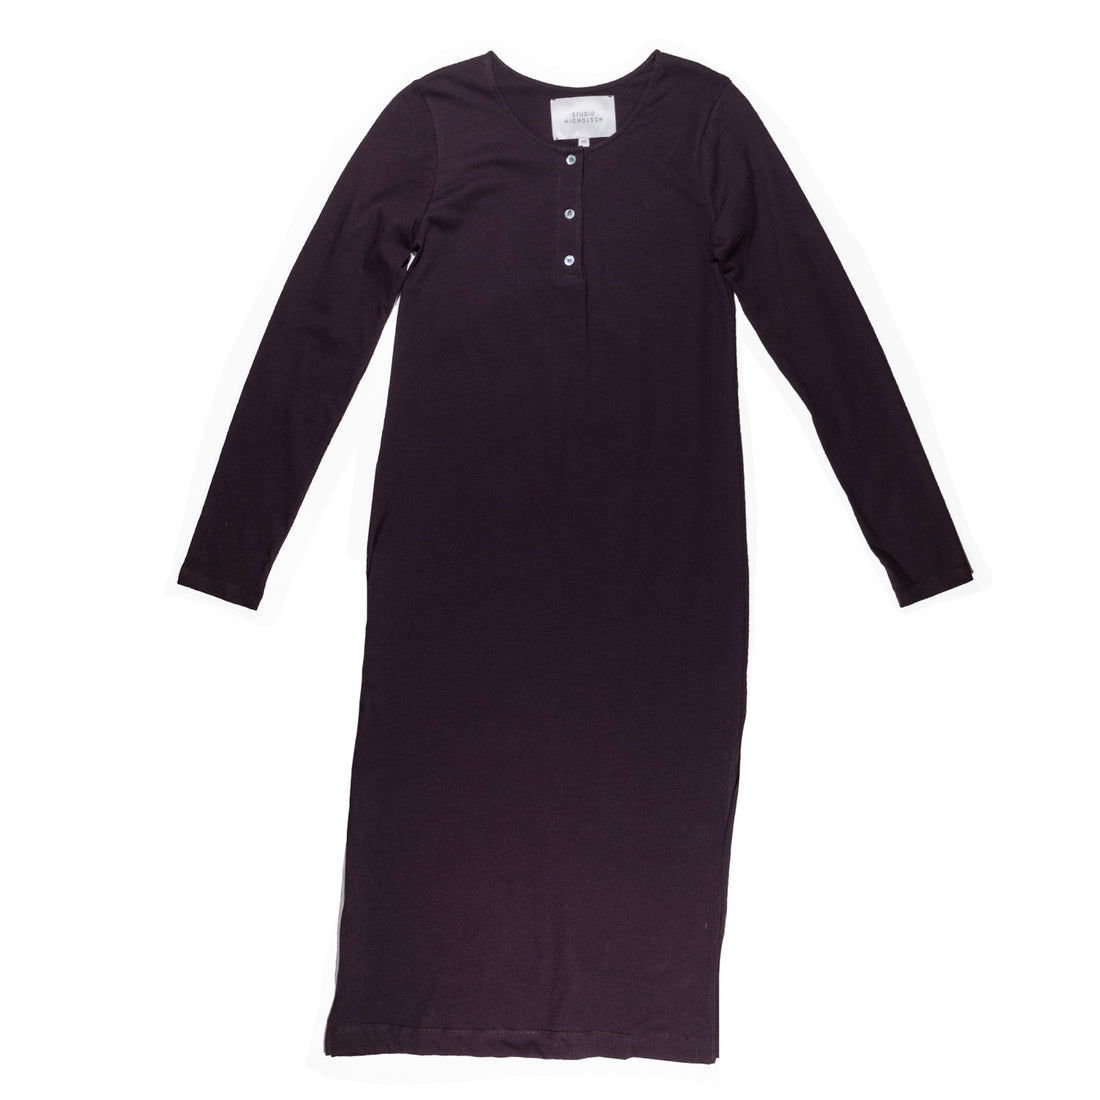 Studio Nicholson Hollis Button Through Jersey Dress in Black Grape